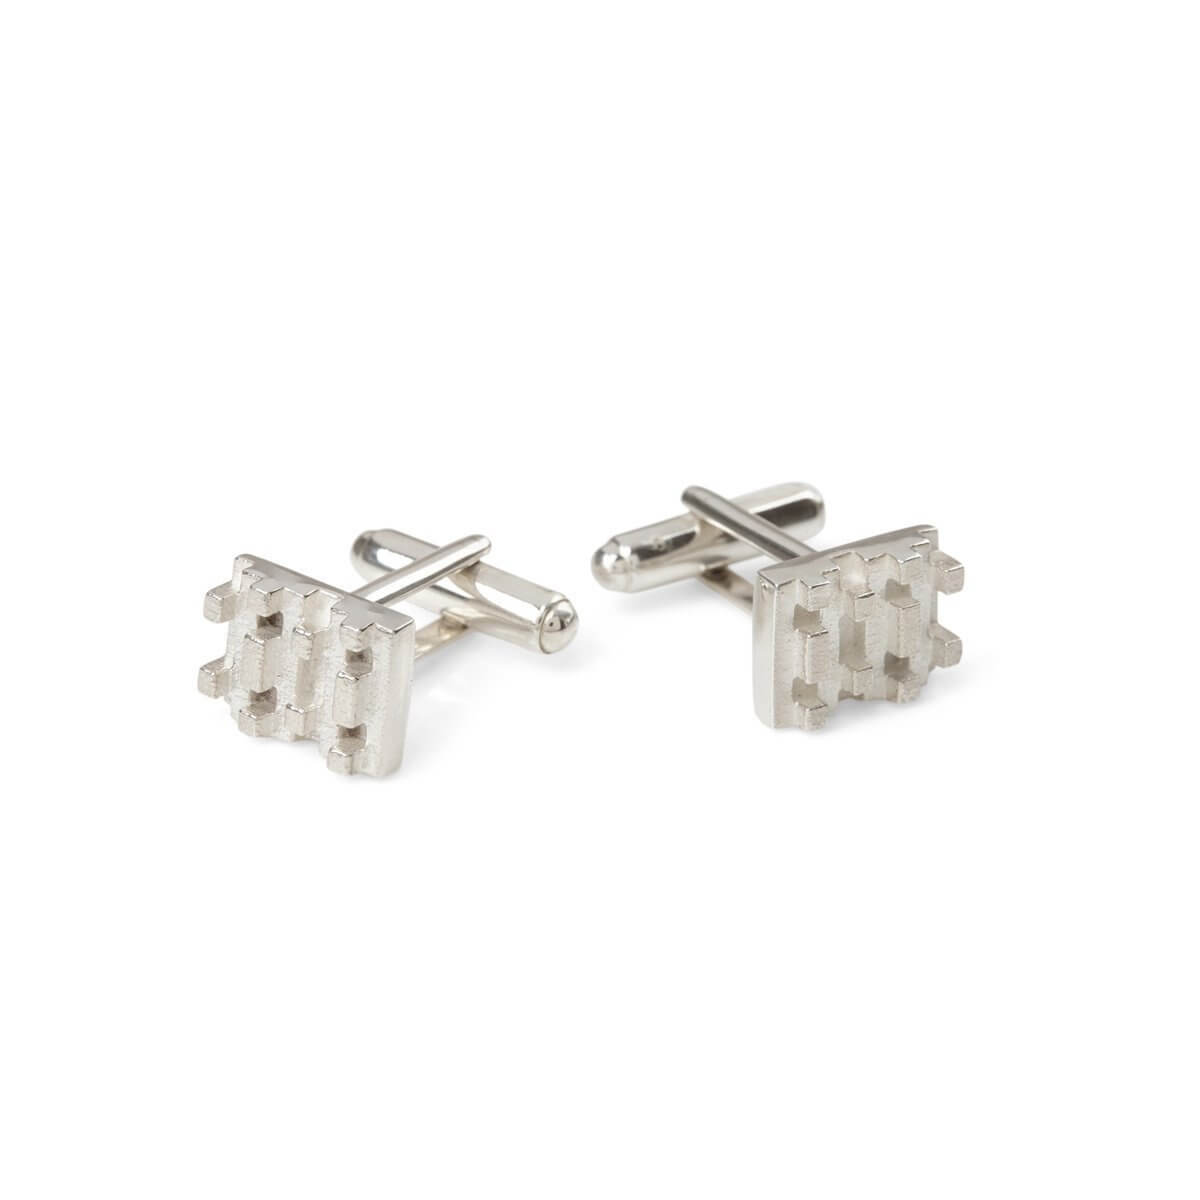 Hive Lego Cufflinks in Sterling Silver